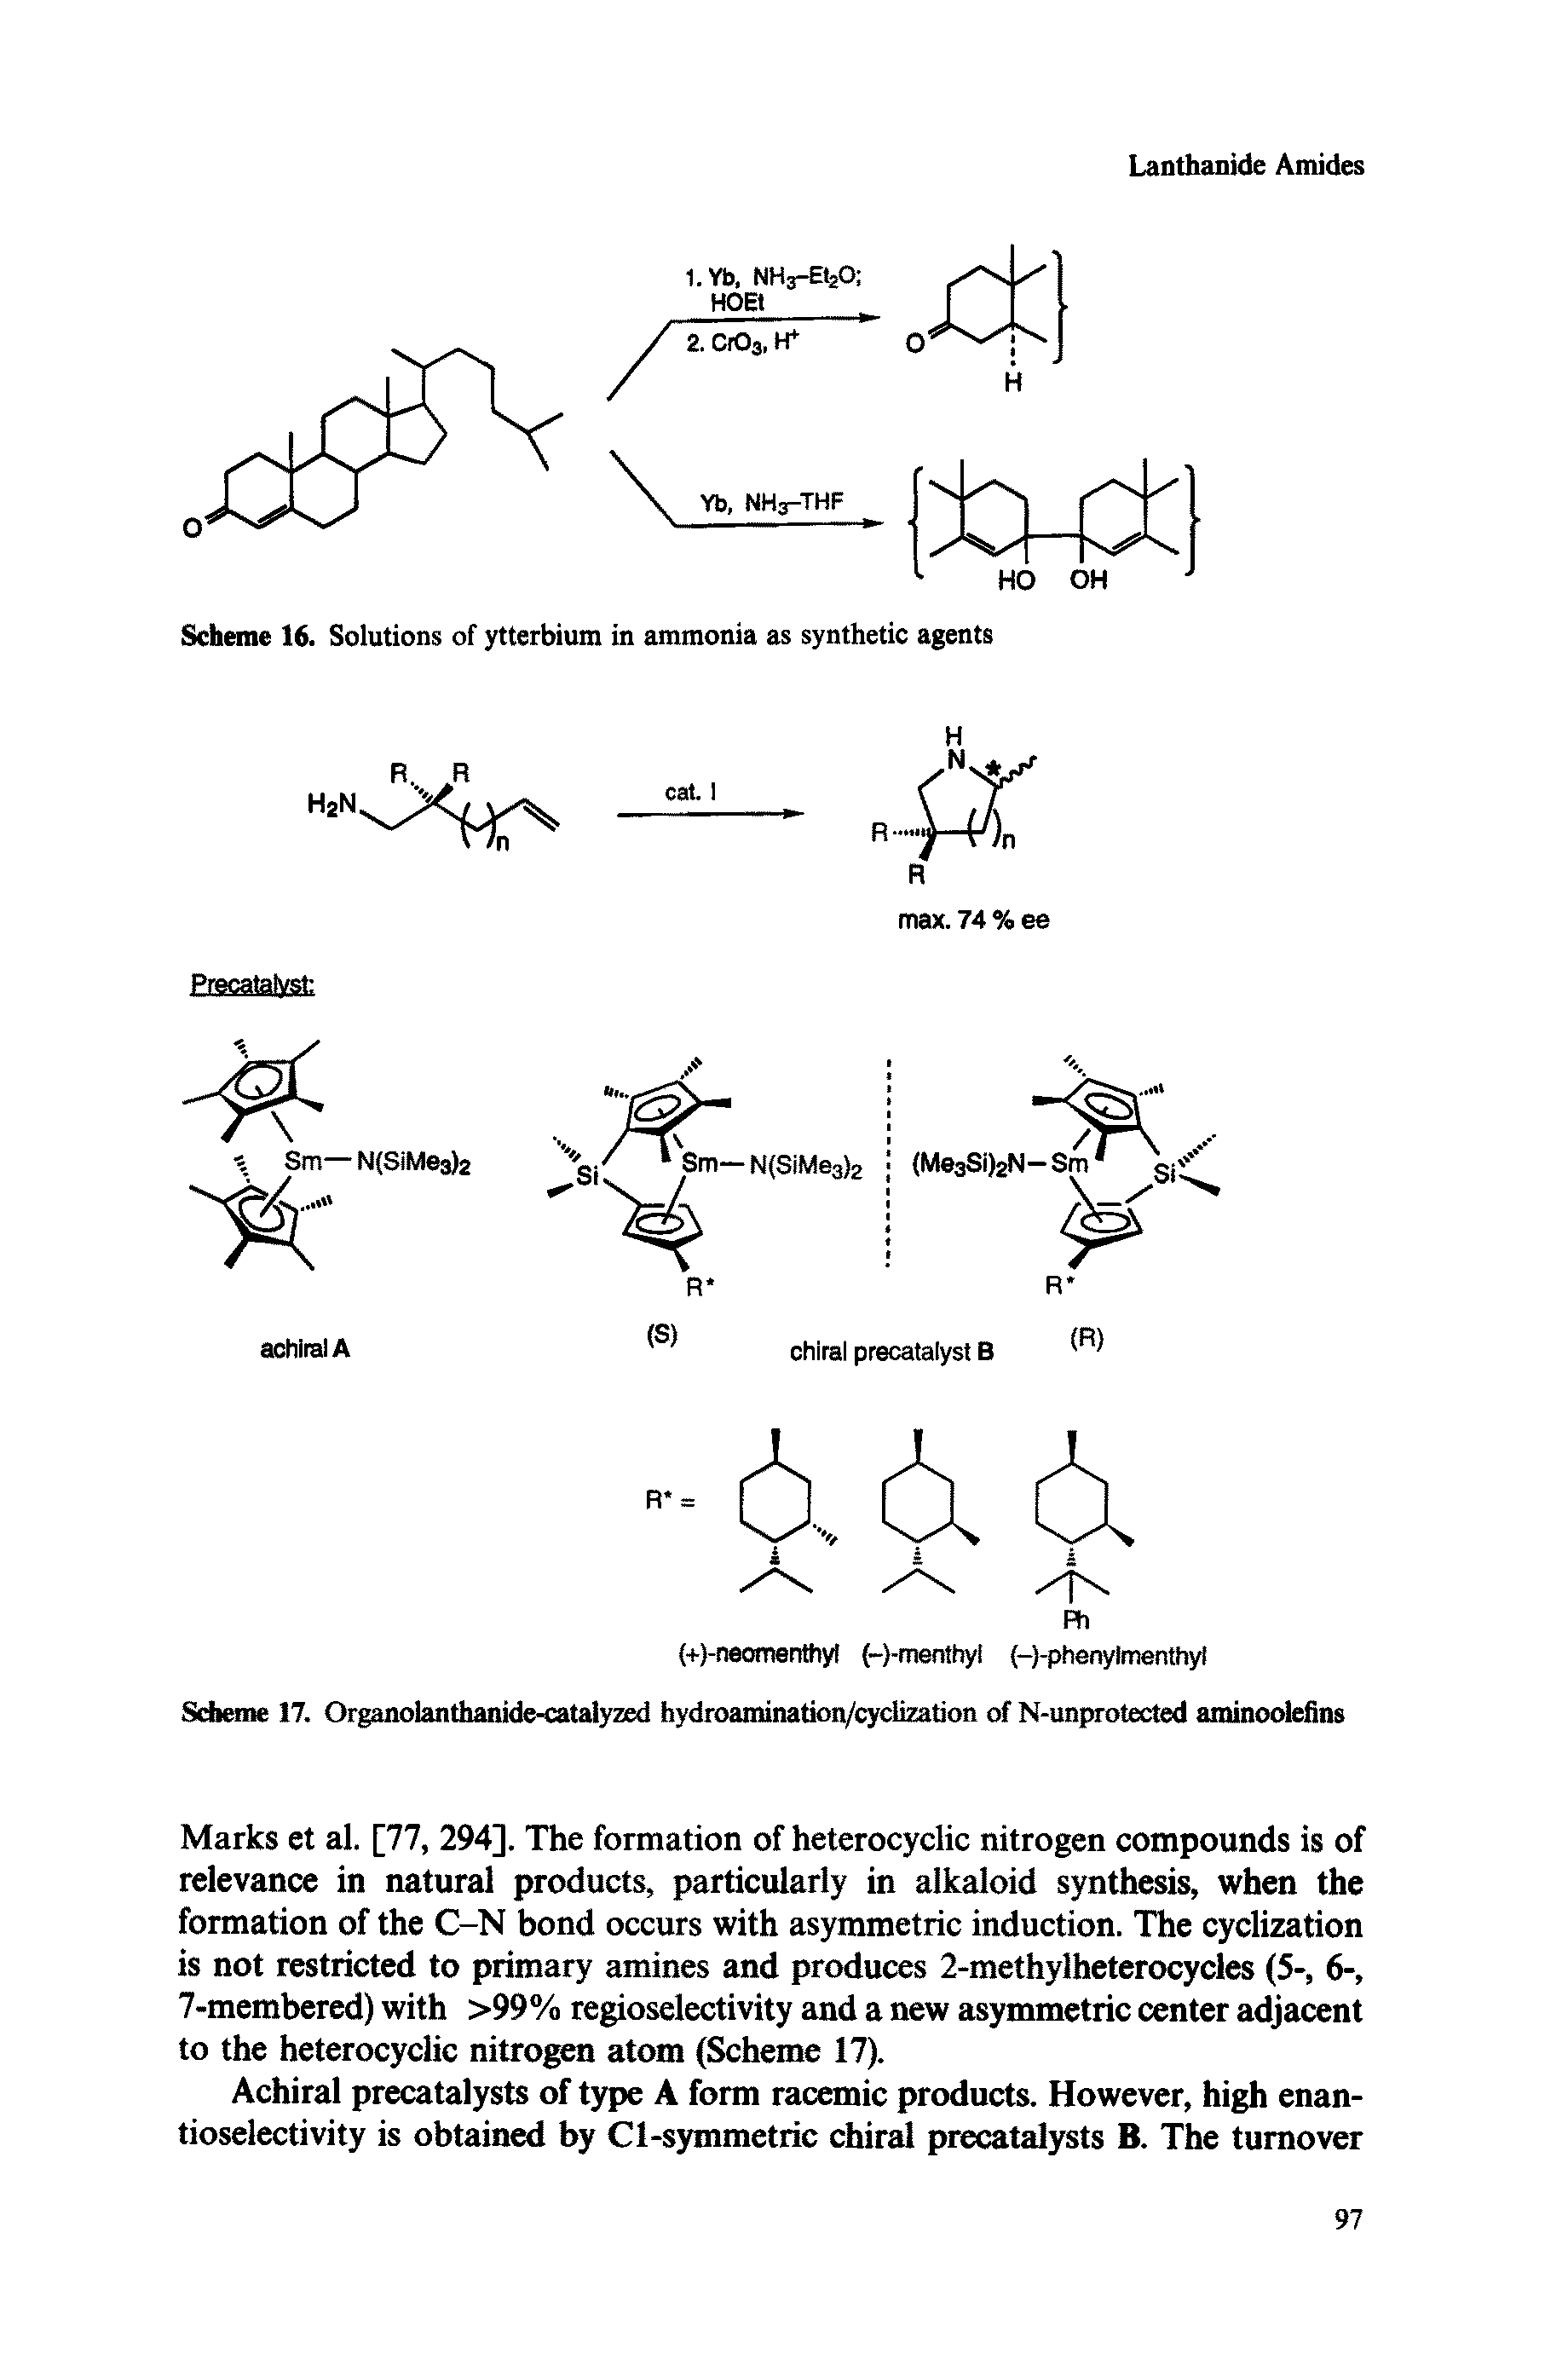 Scheme 17. Organolanthanide-catalyzed hydroamination/cyclization of N-unprotected aminoolefins...